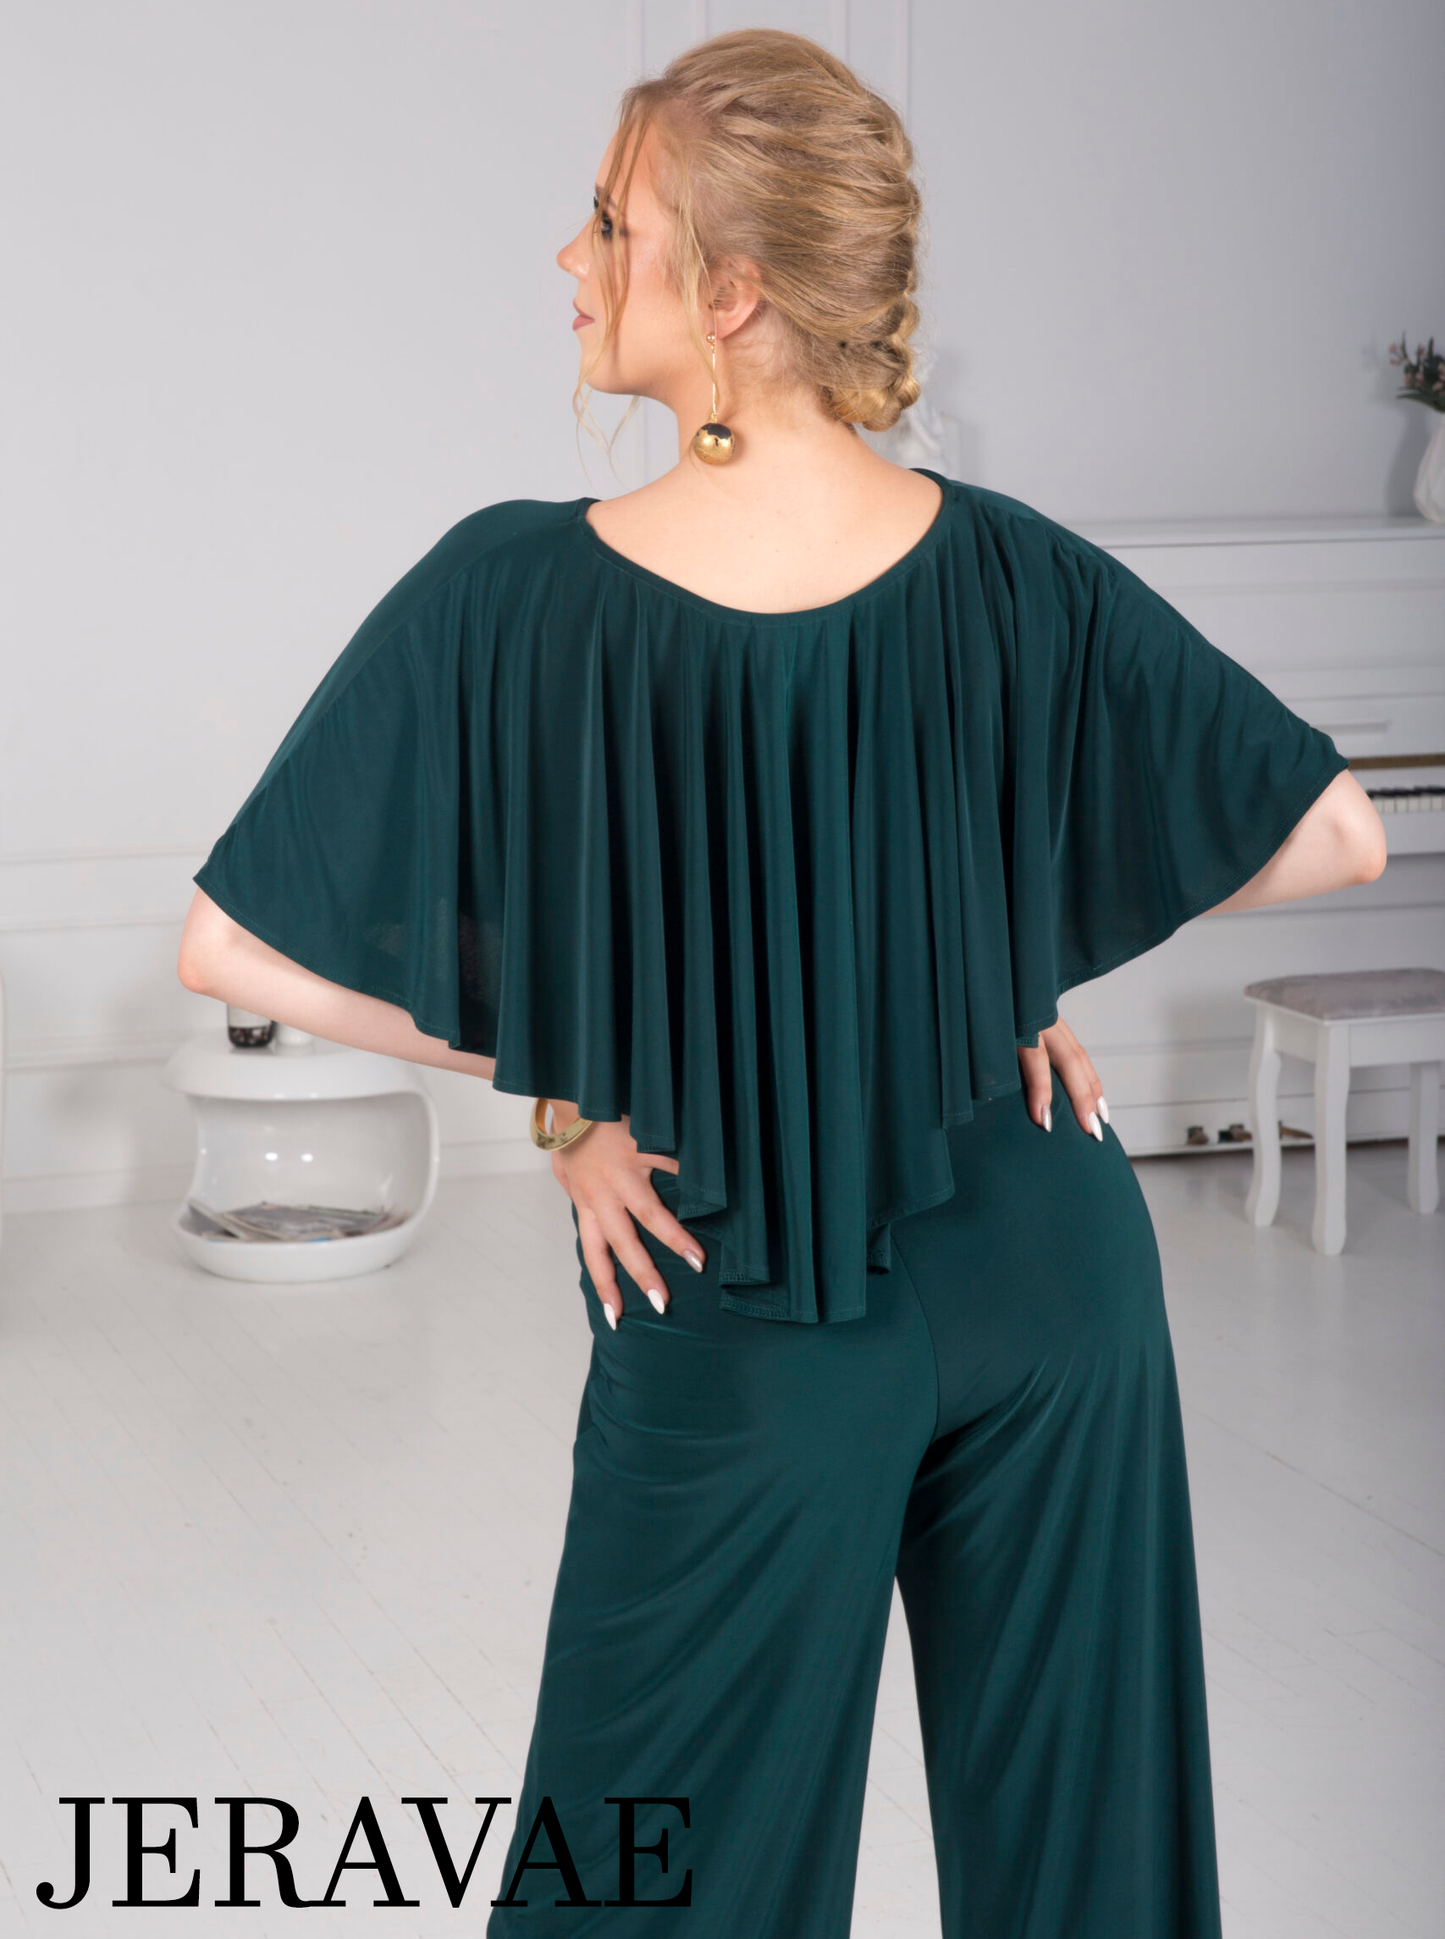 Body Positive Senga Dancewear BOLERO Bottle Green Jumpsuit with Ruffle Cape, Wide Leg Pants, and Tie Detail Sizes XL-4XL PRA 984 in Stock